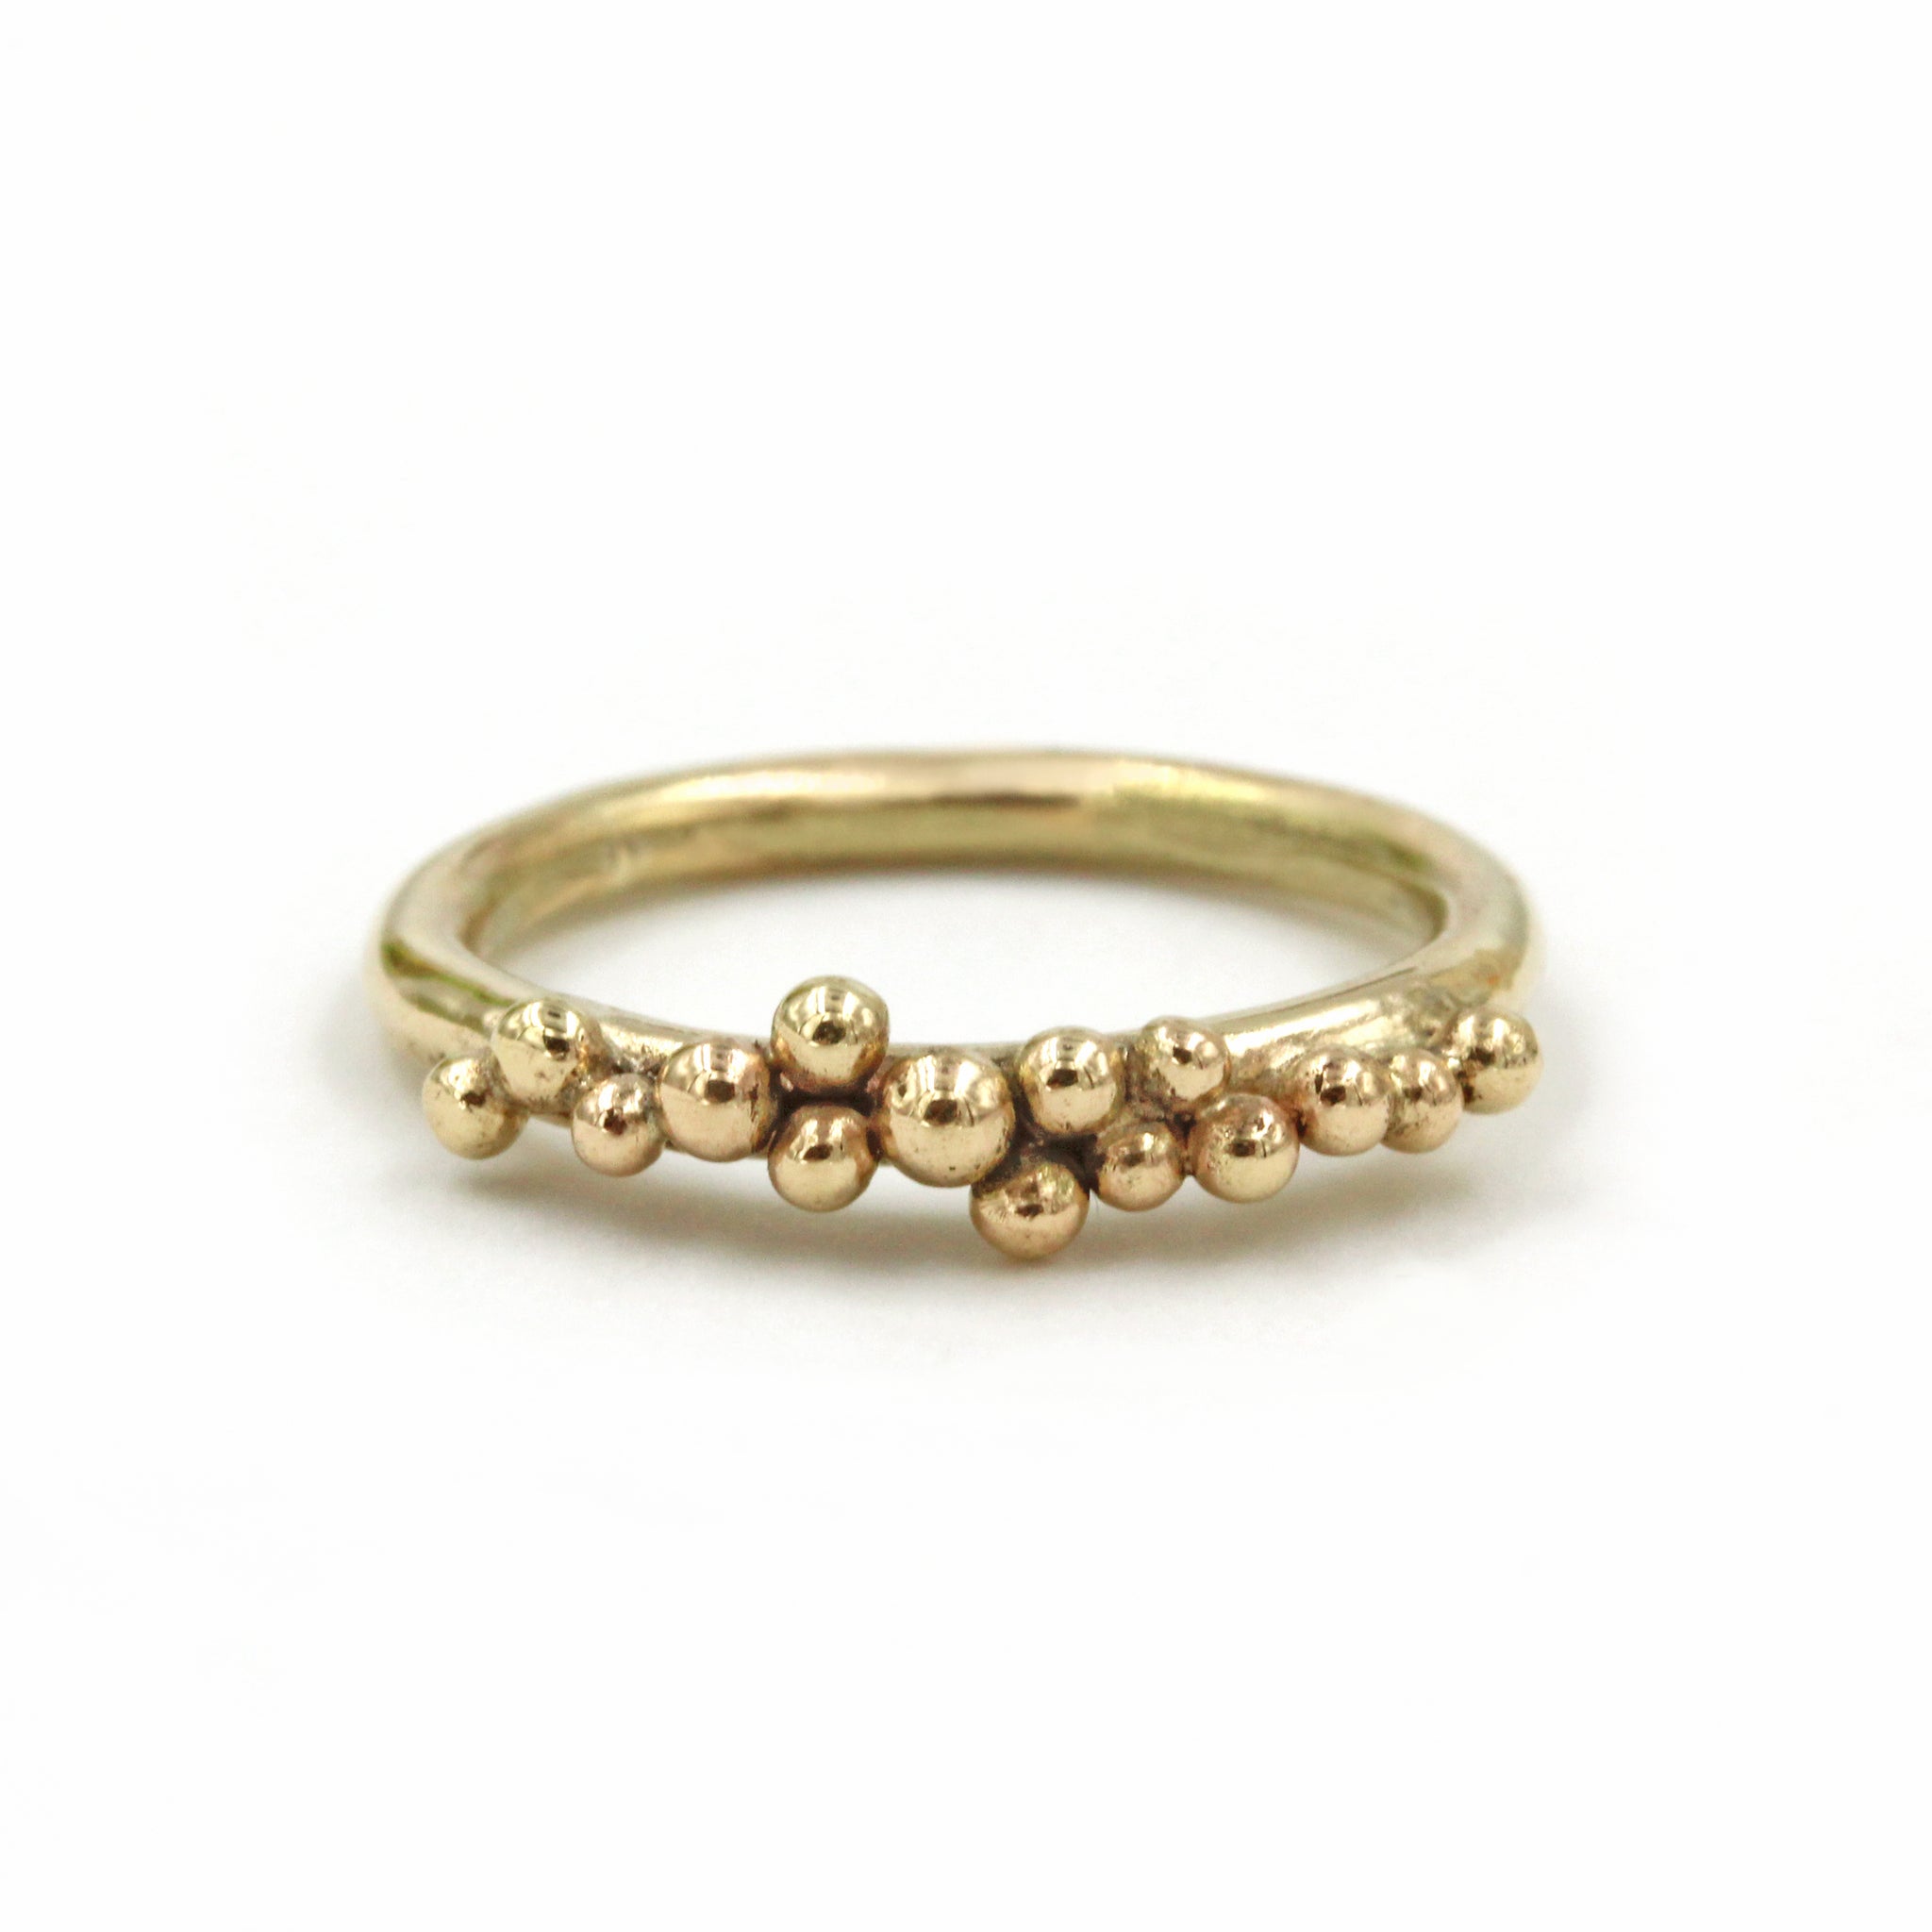 Handmade sea inspired 9ct gold wedding ring 